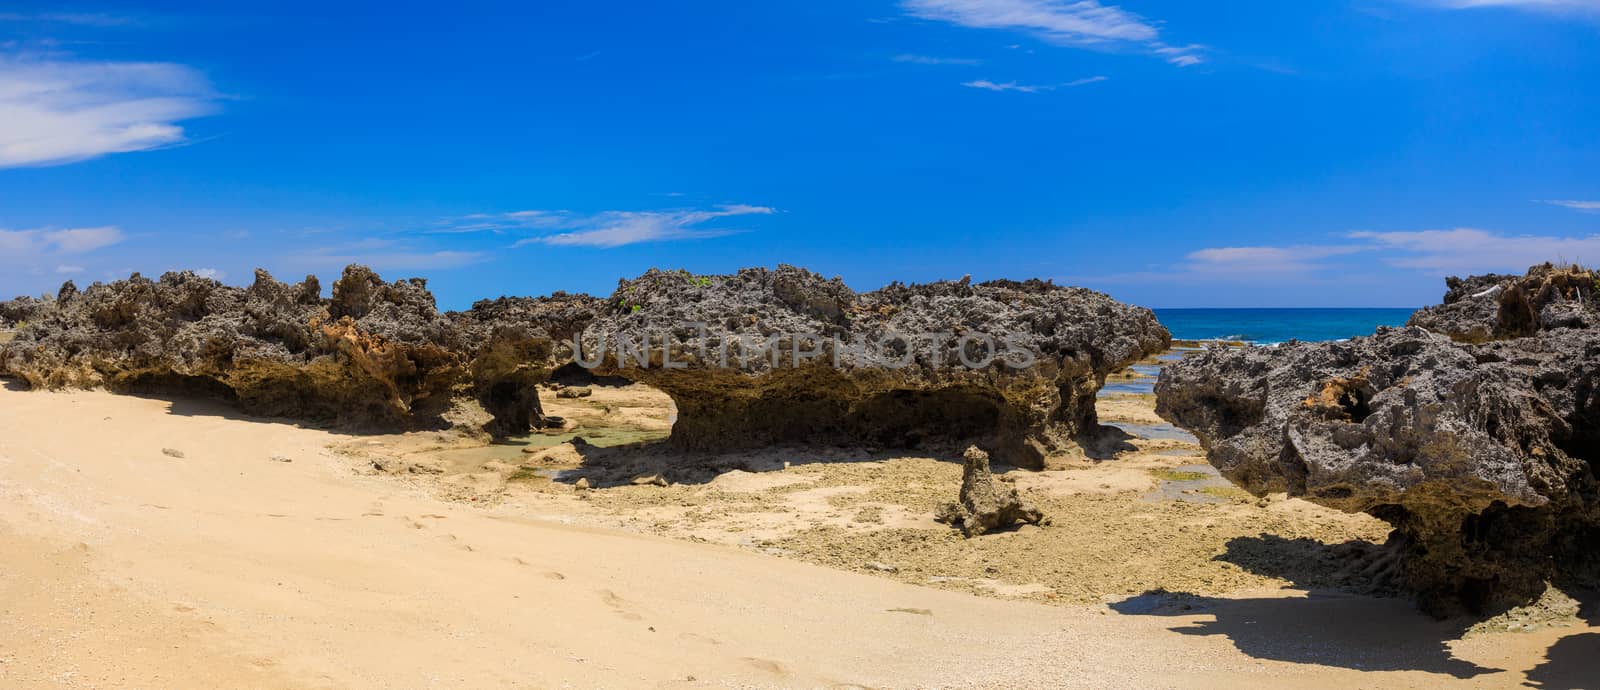 Beautiful rock formation on beach in Antsiranana region, Diego Suarez bay in Indian ocean,  Madagascar beautiful picturesque nature landscape